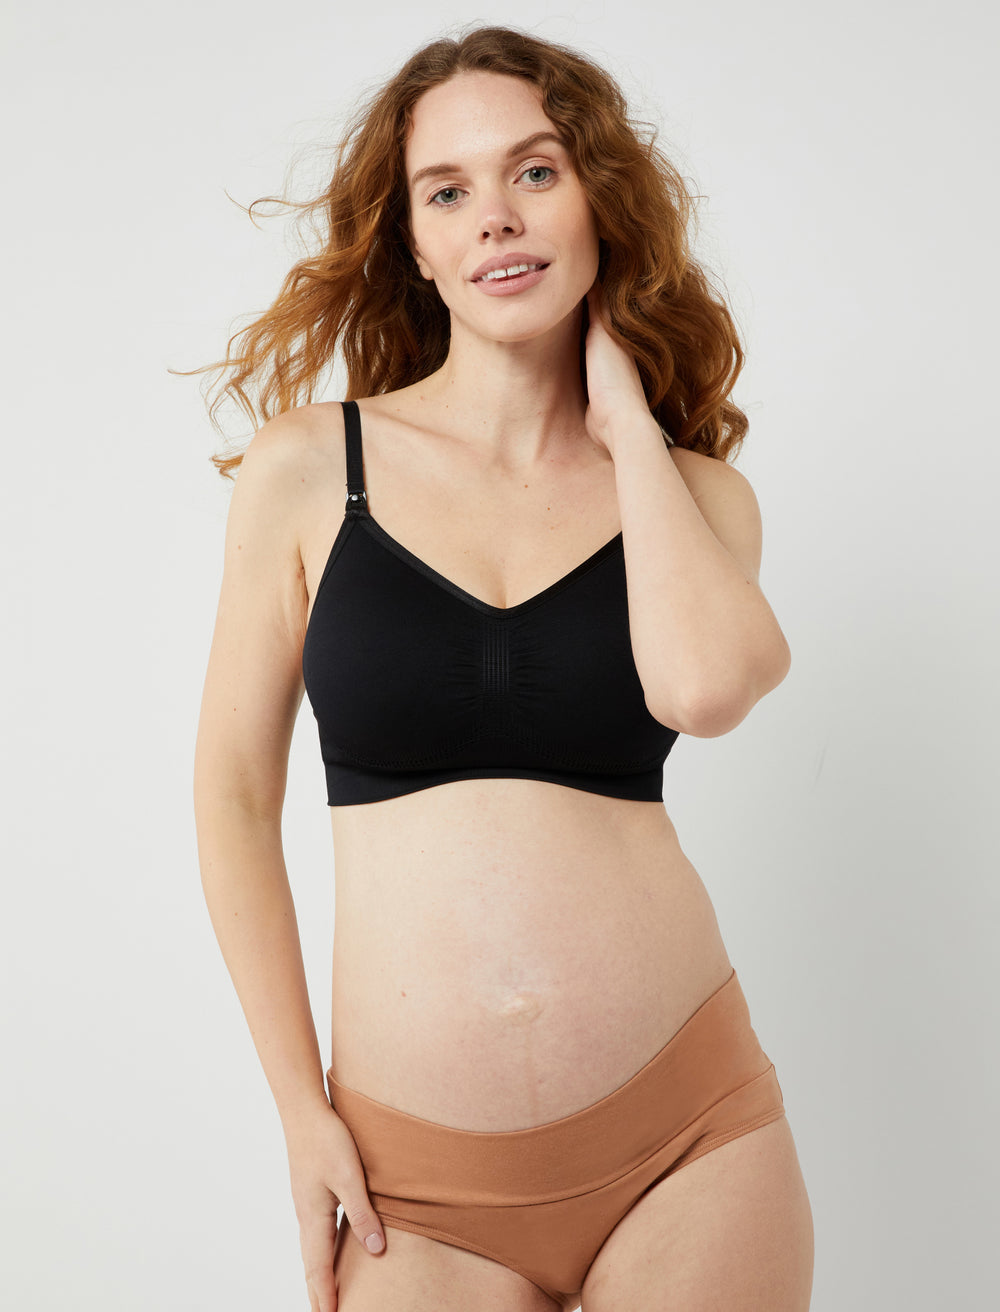 Foldable Maternity Underwear, 6-pk, All Black